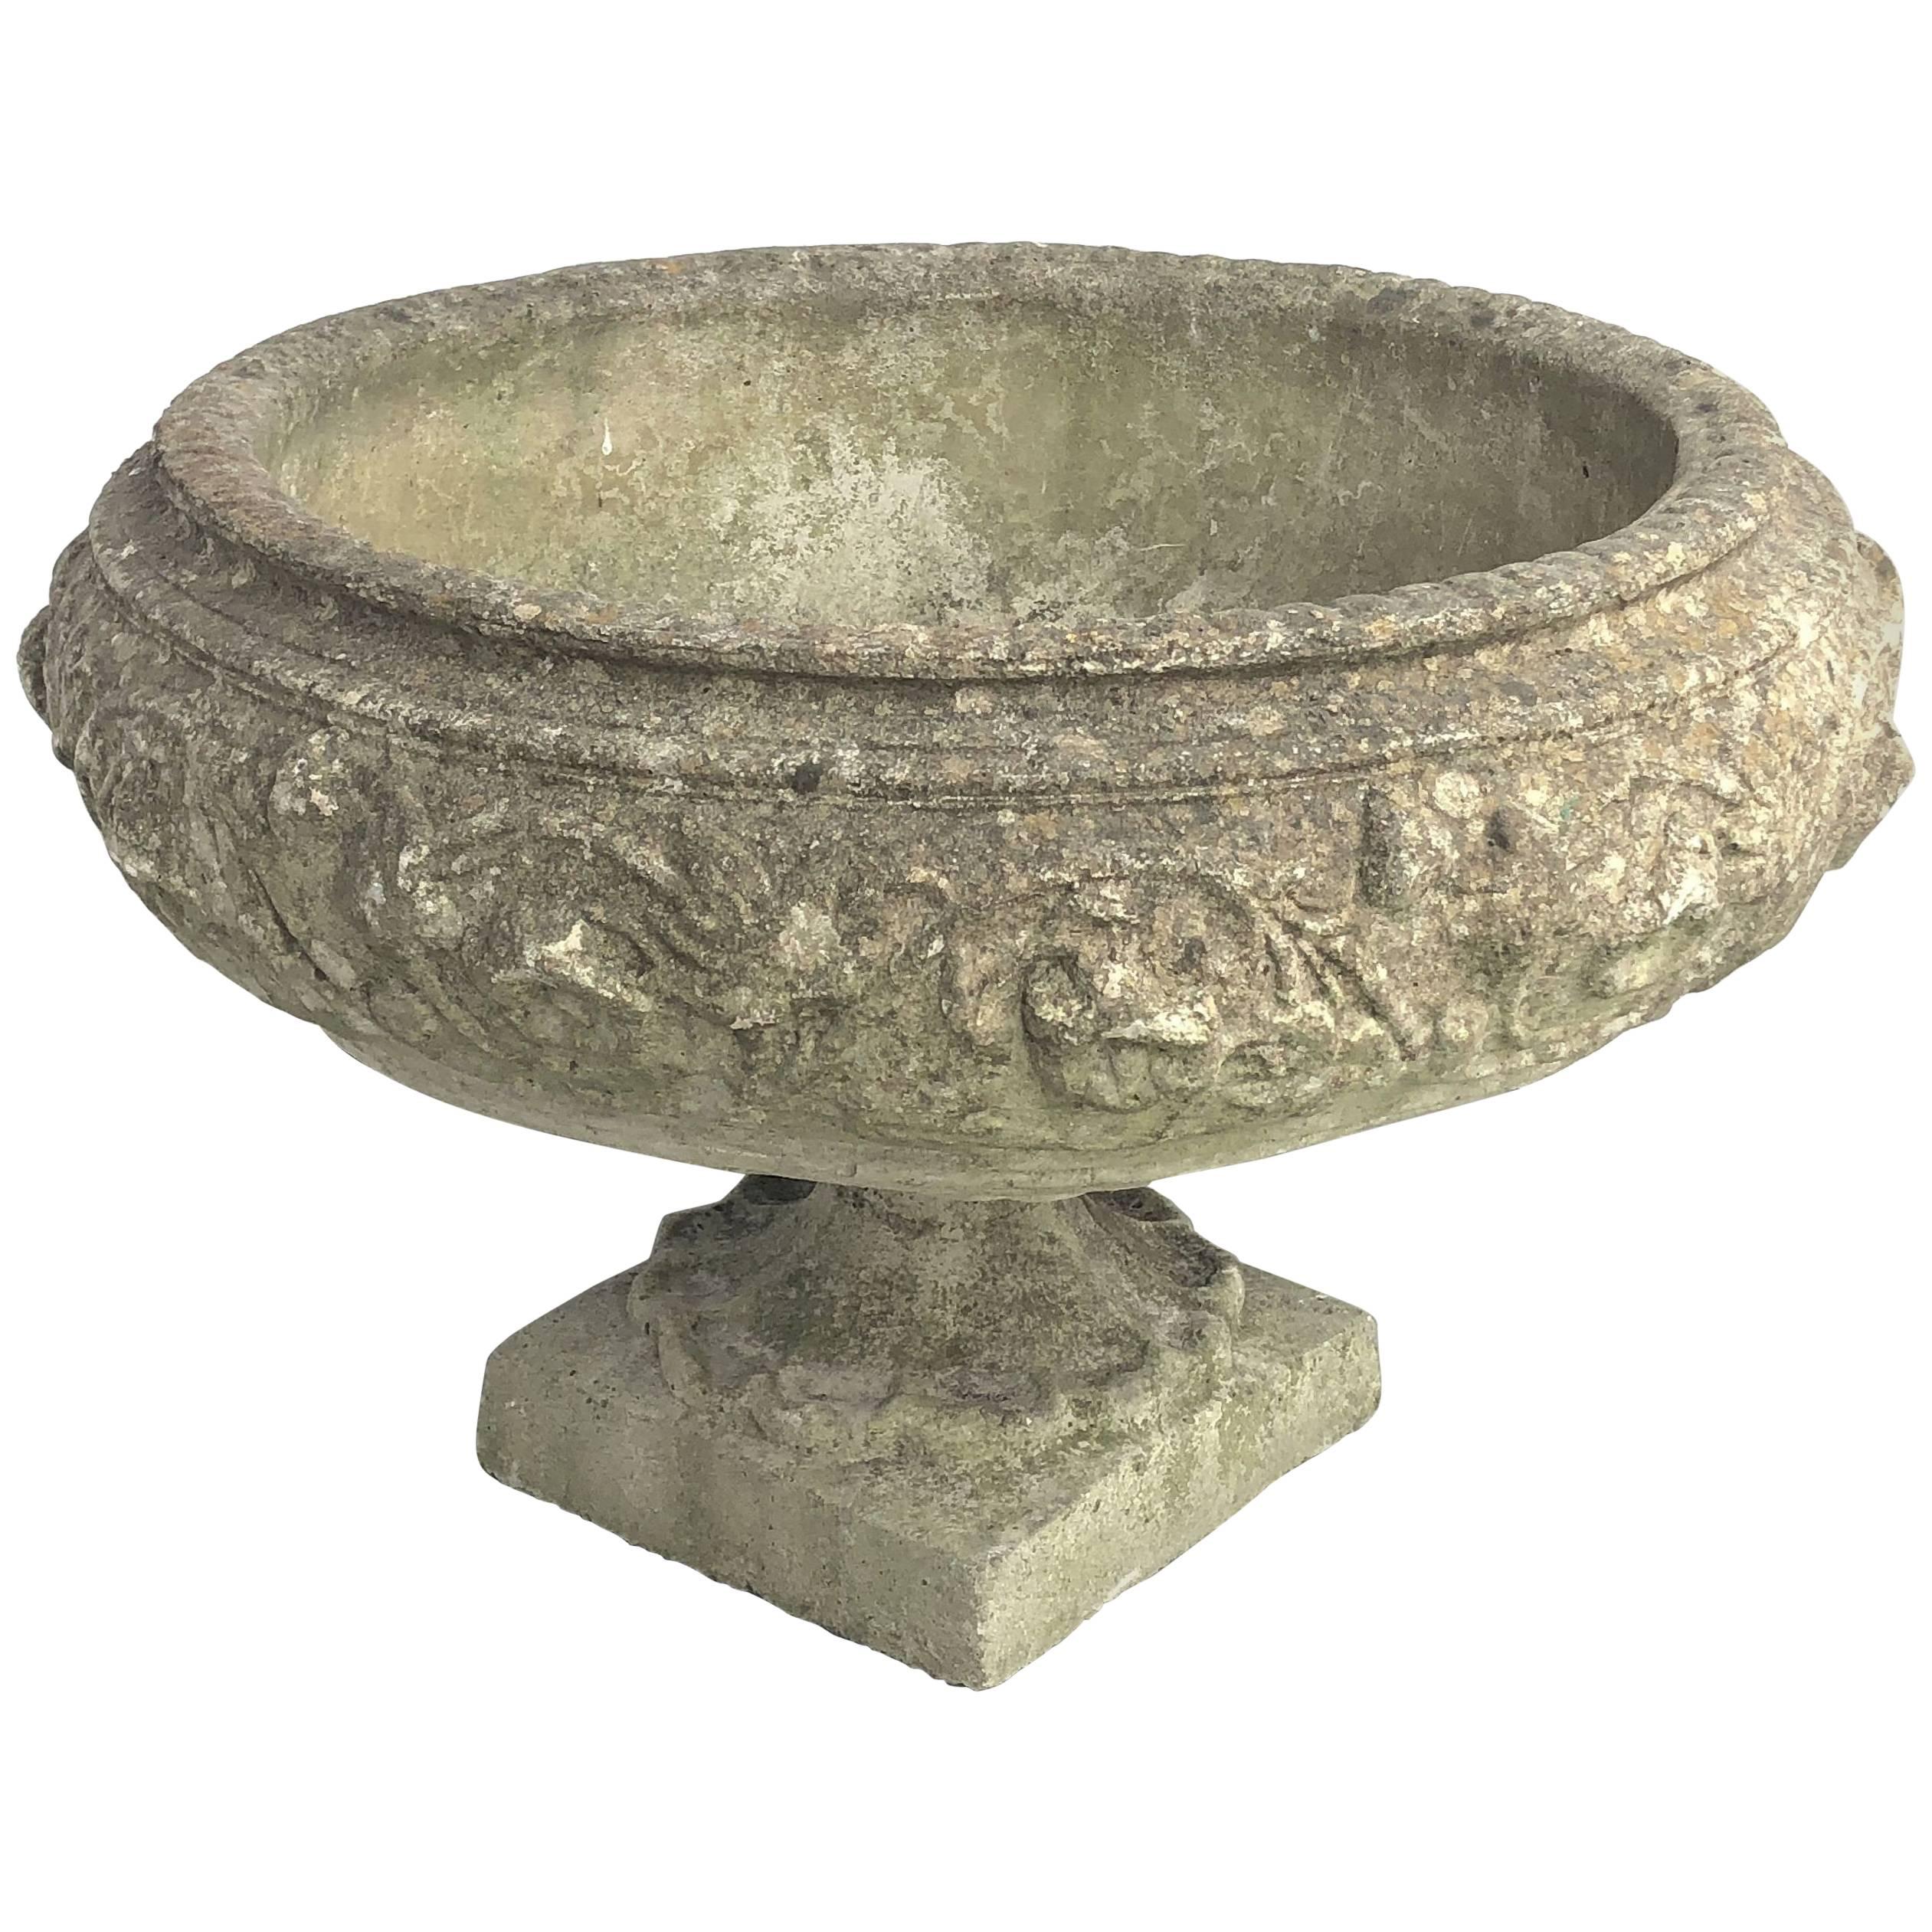 Large English Garden Stone Urn or Planter